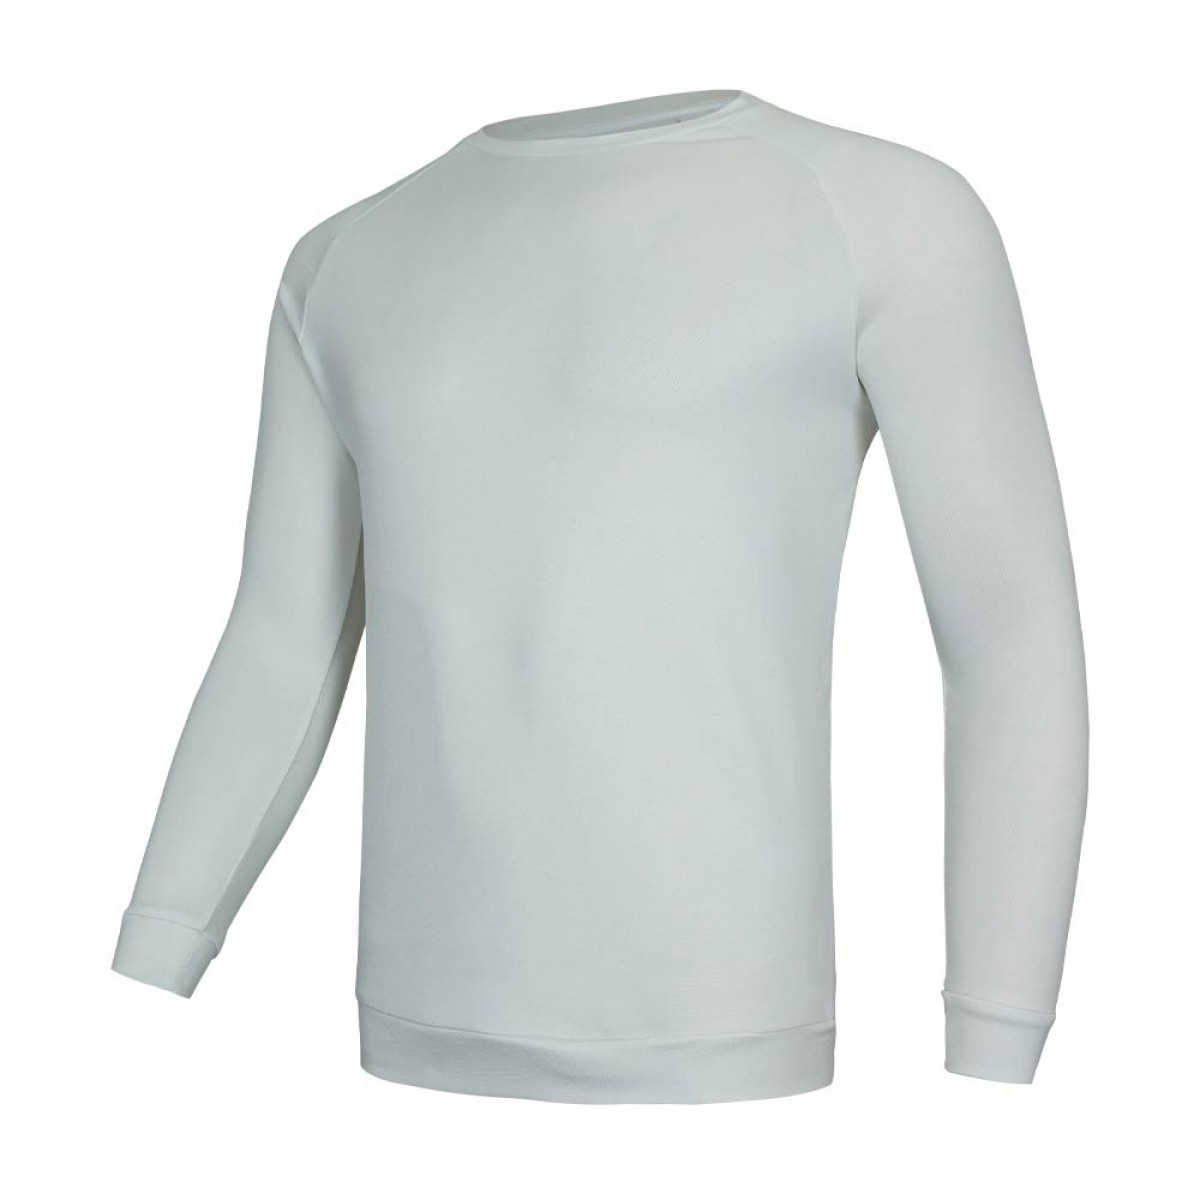 sweat-shirt-with-rib-kss15171-7a